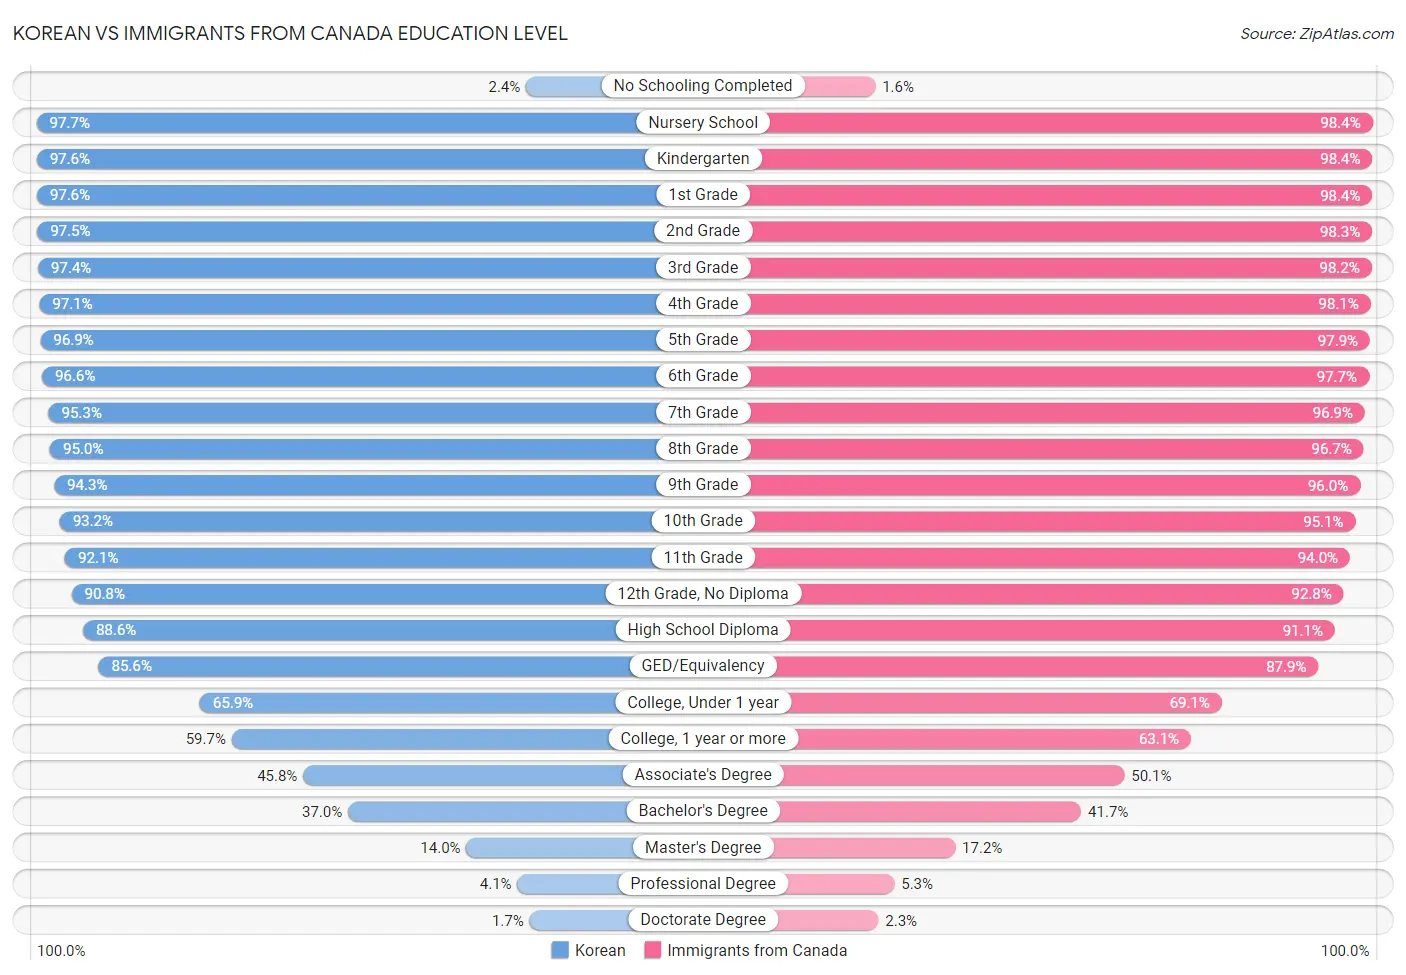 Korean vs Immigrants from Canada Education Level